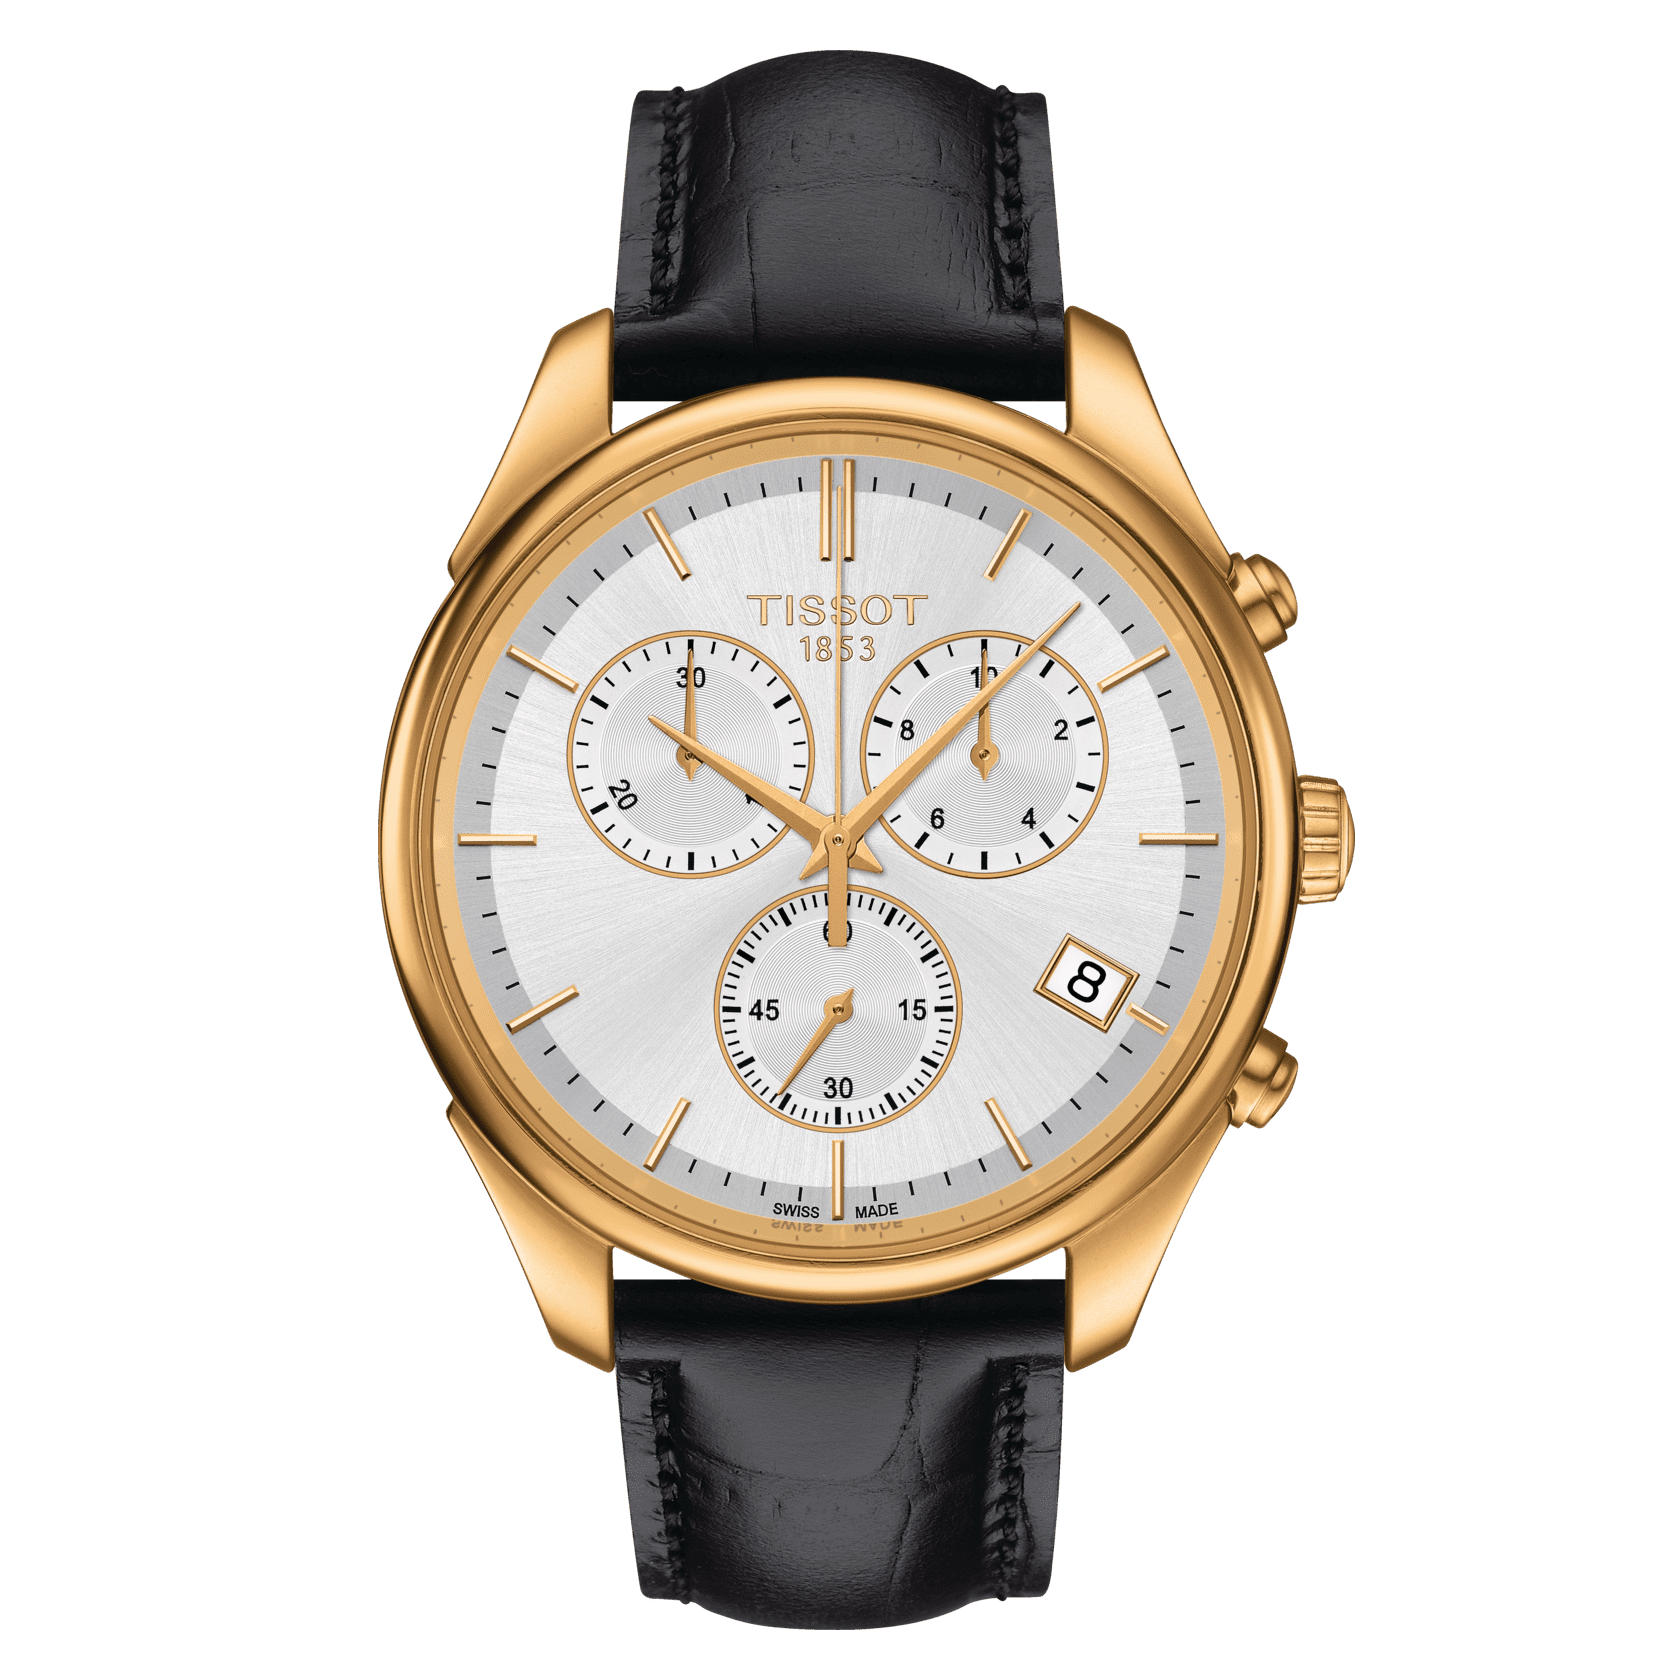 Cartier Replica Watches In USA